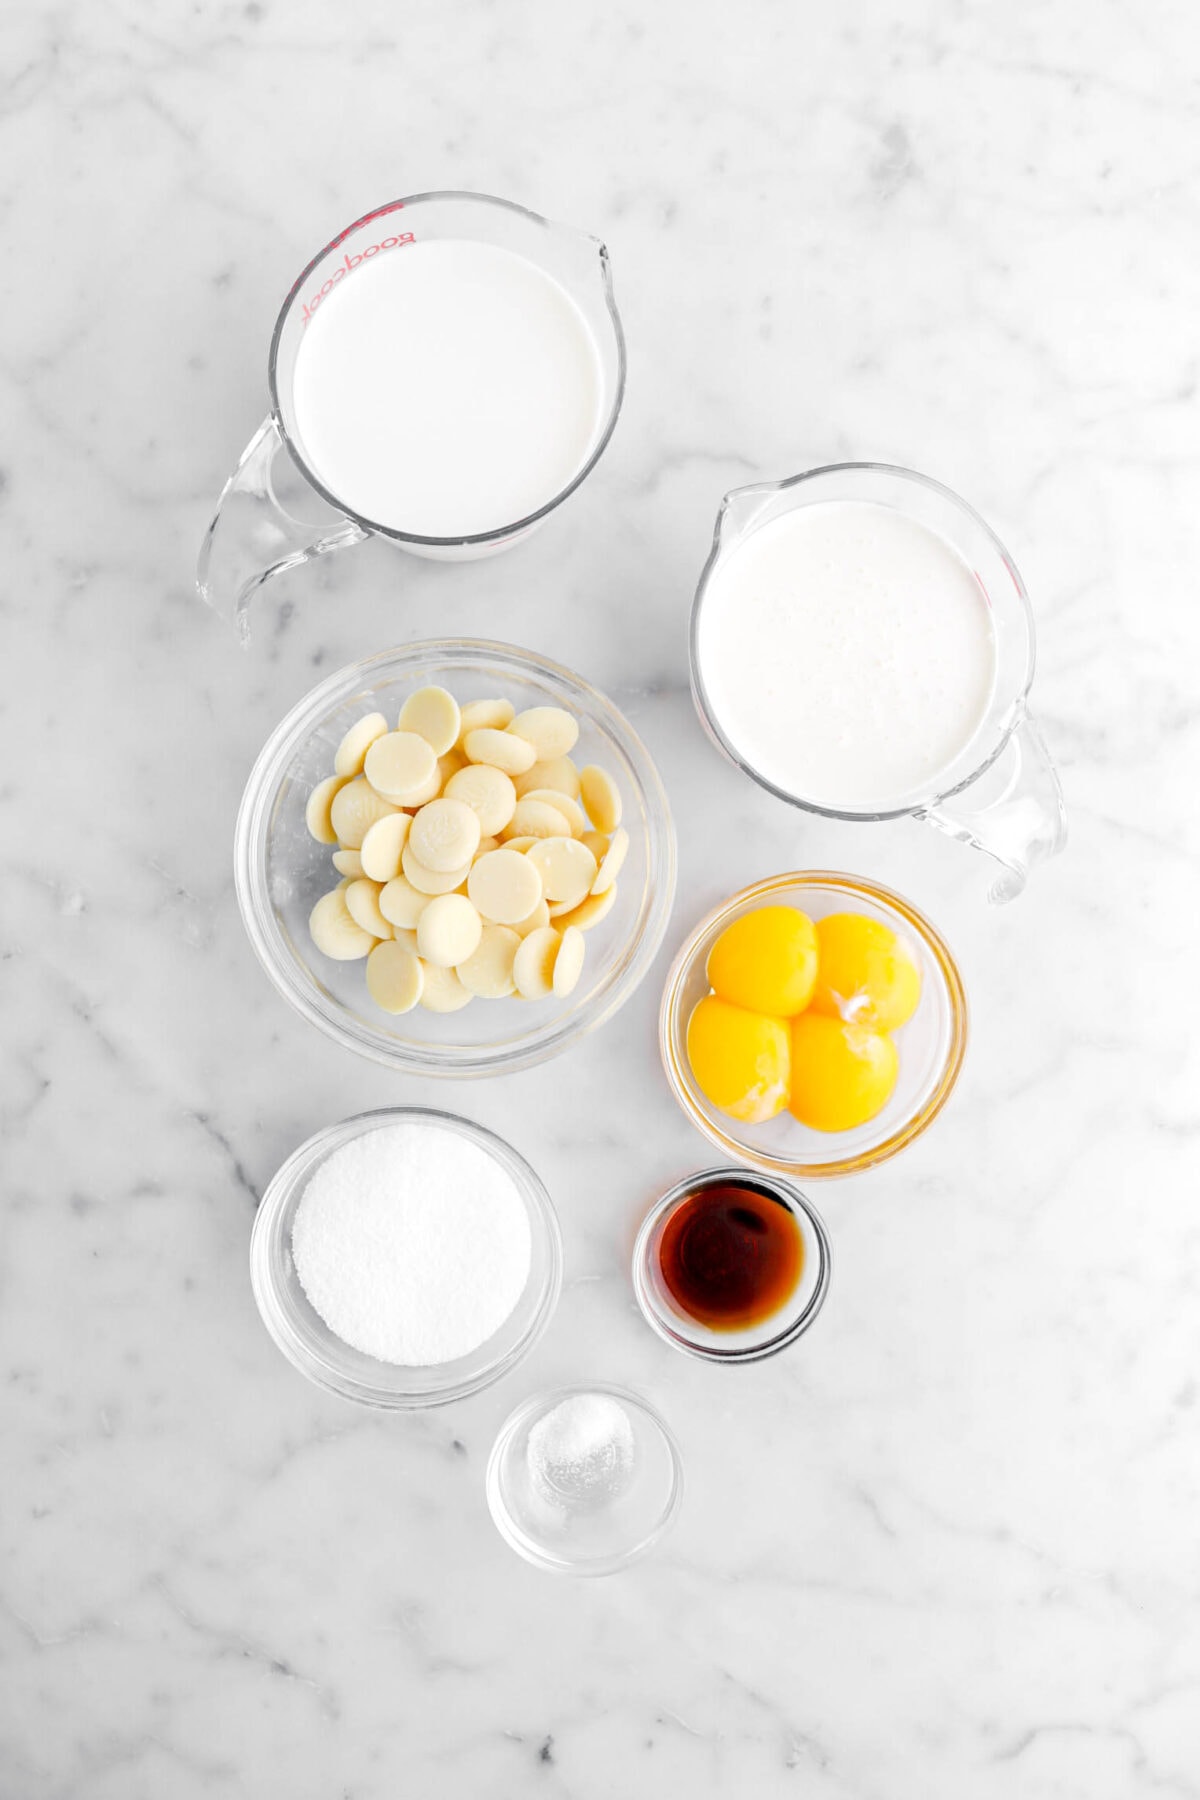 milk, cream white chocolate, egg yolks, sugar, vanilla, and salt on marble surface.